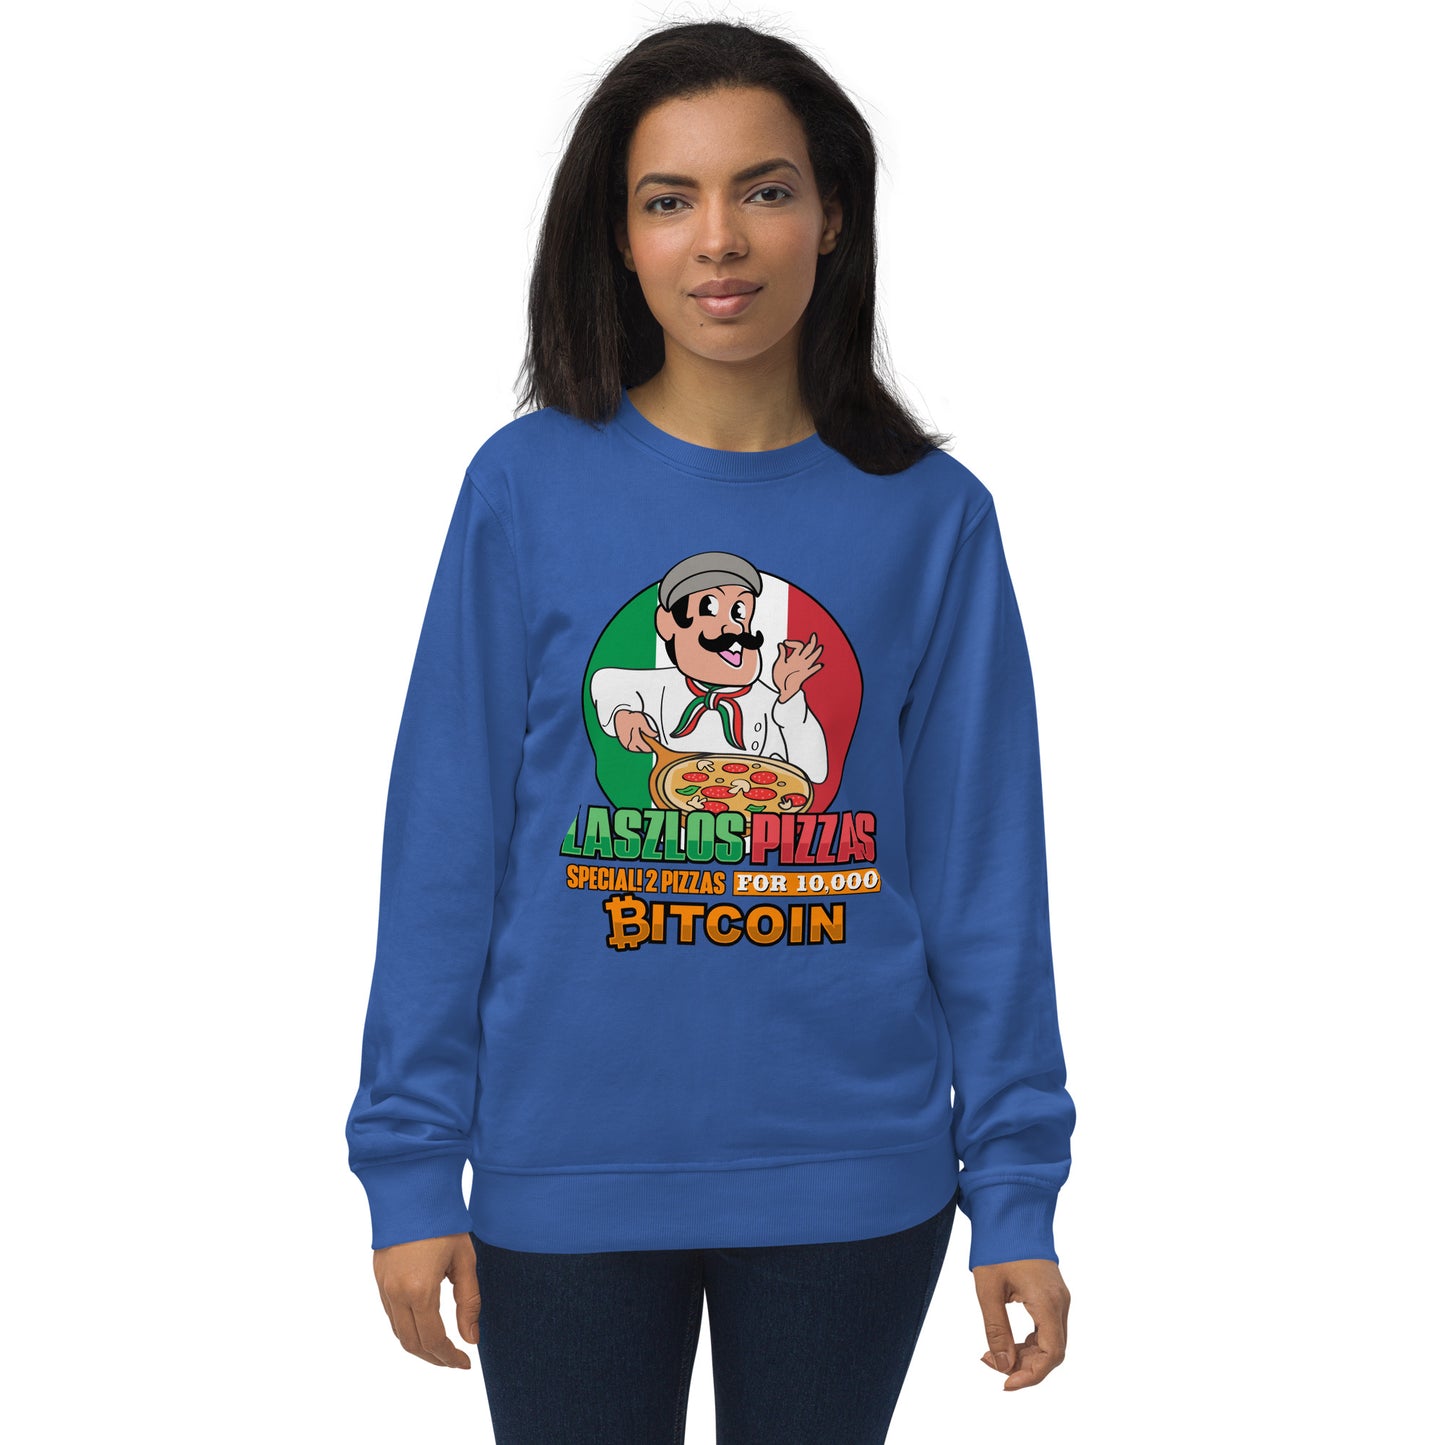 Bitcoin Pizza Day organic sweatshirt